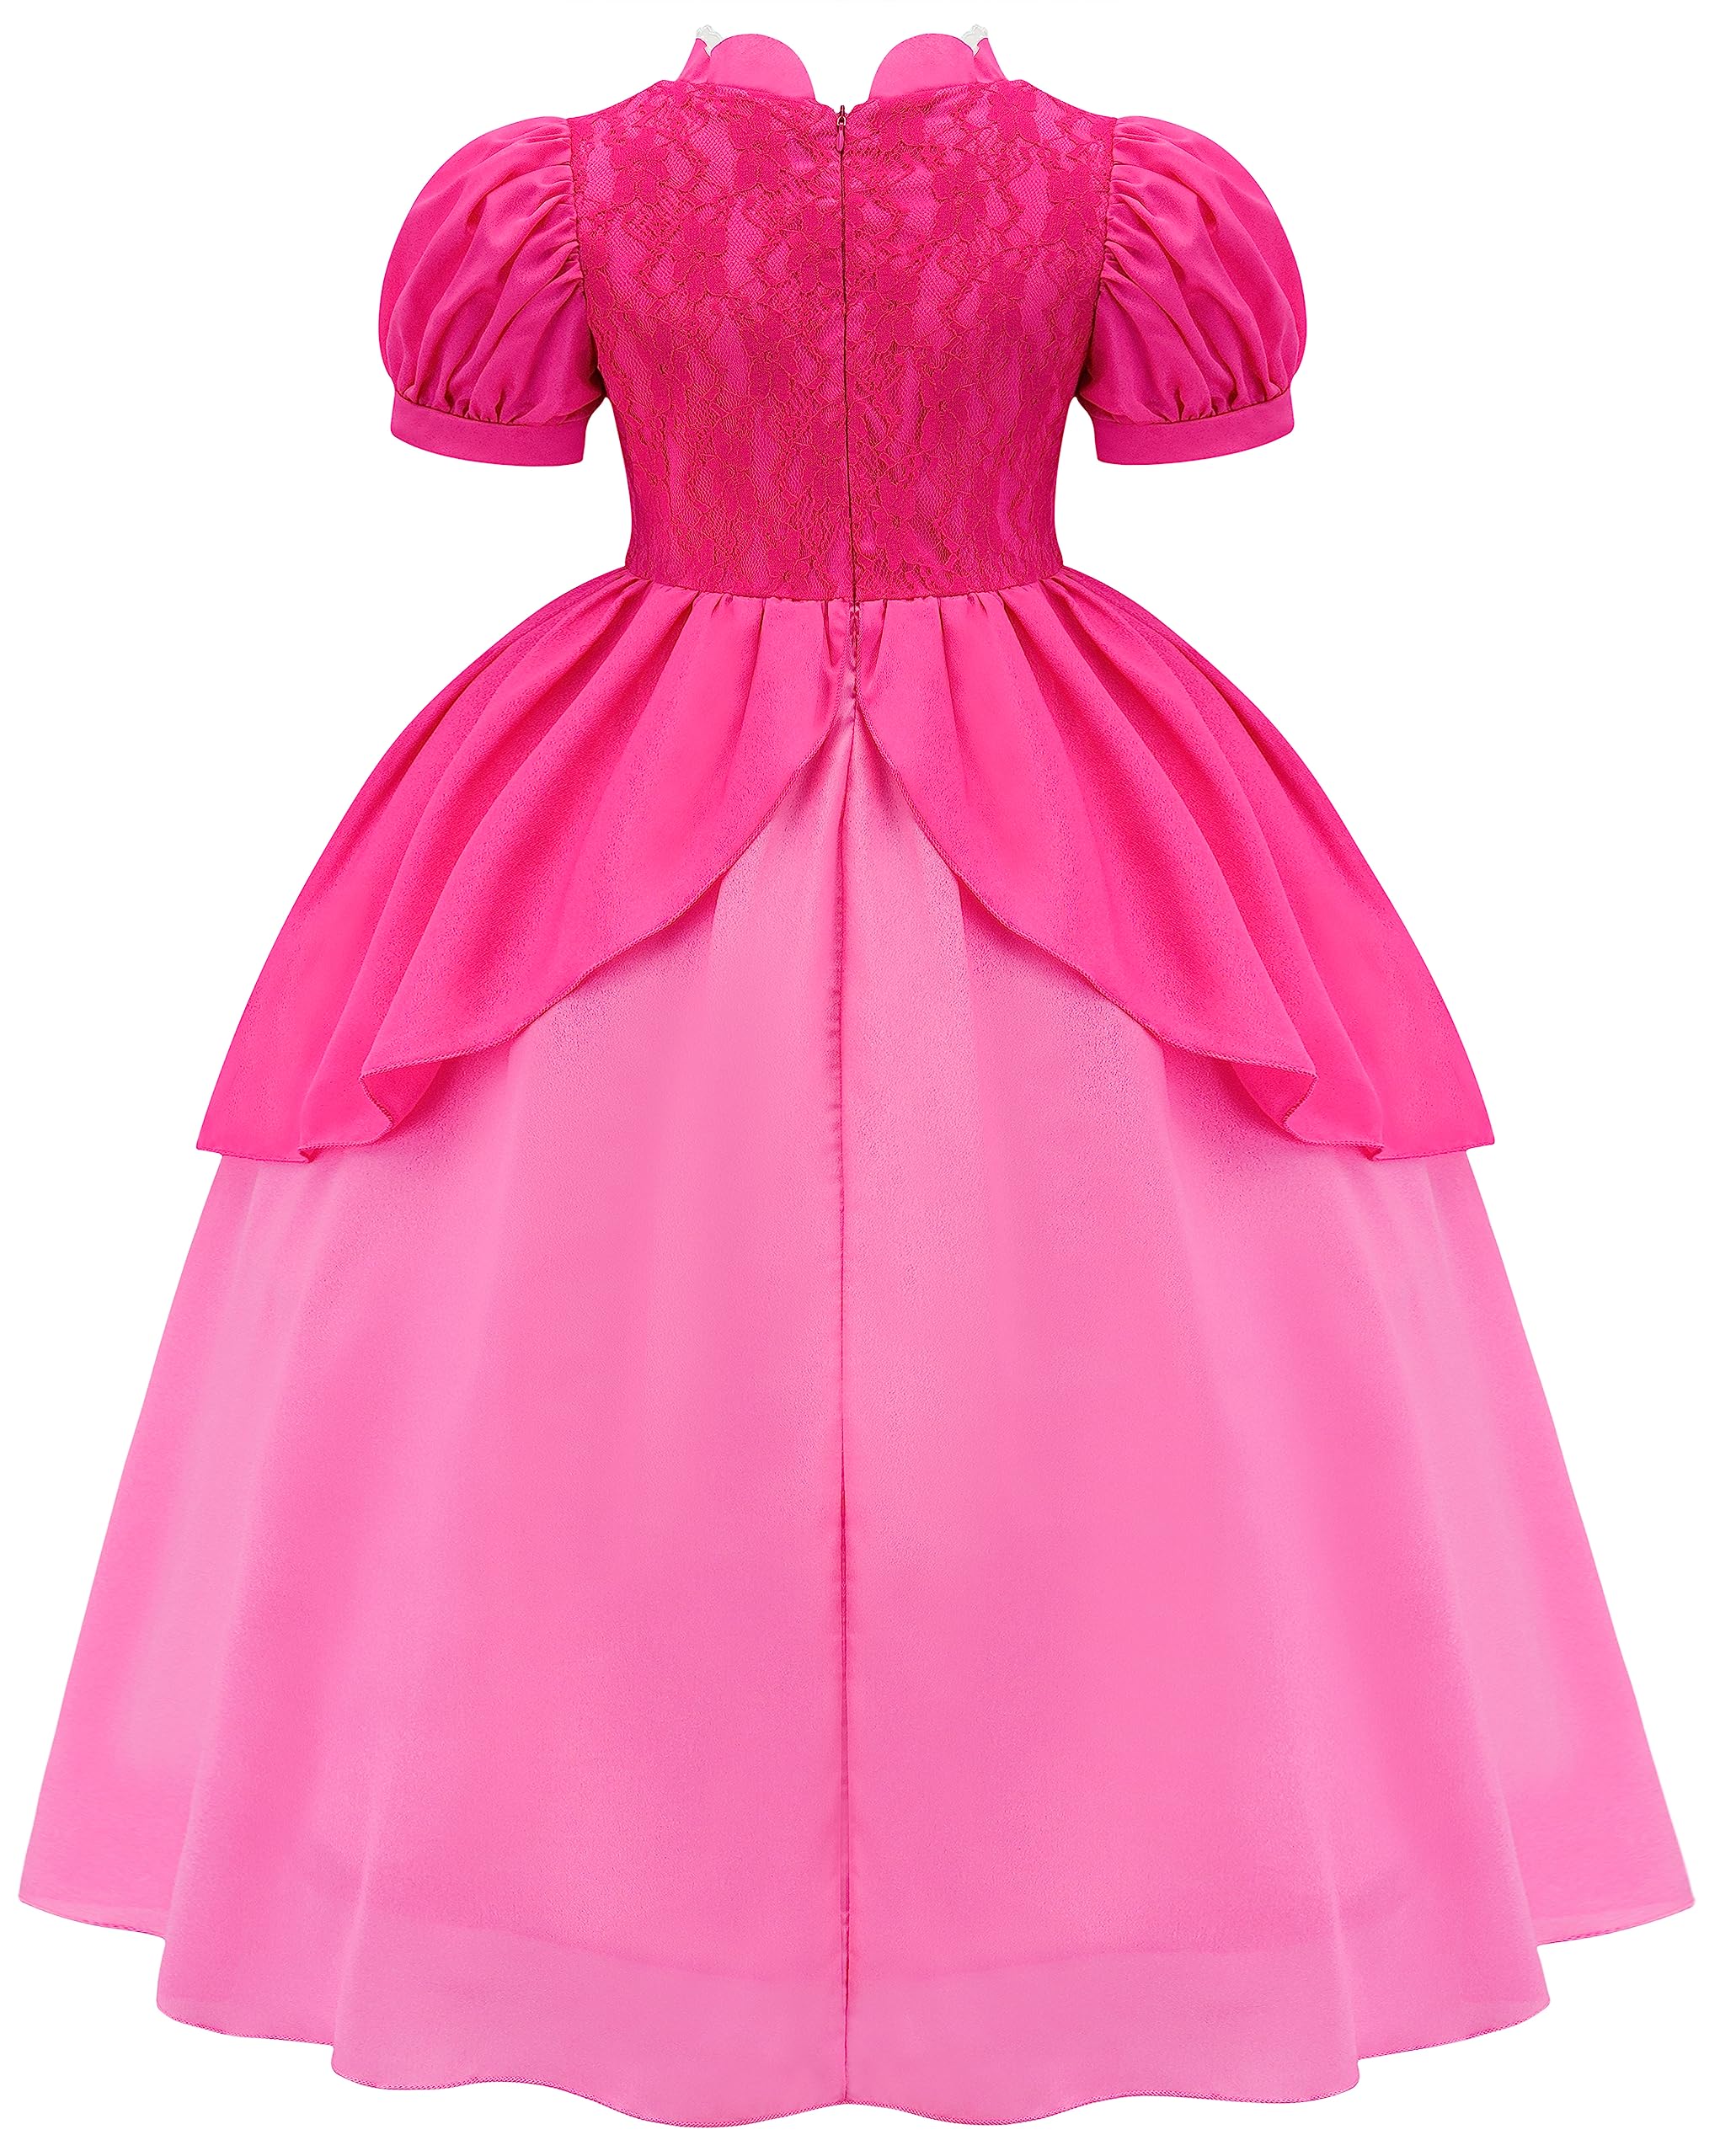 GZ-LAOPAITOU Princess Peach Costume for Girls Princess Peach Dress Birthday Dress Up Cosplay 3-12Years - image 4 of 5